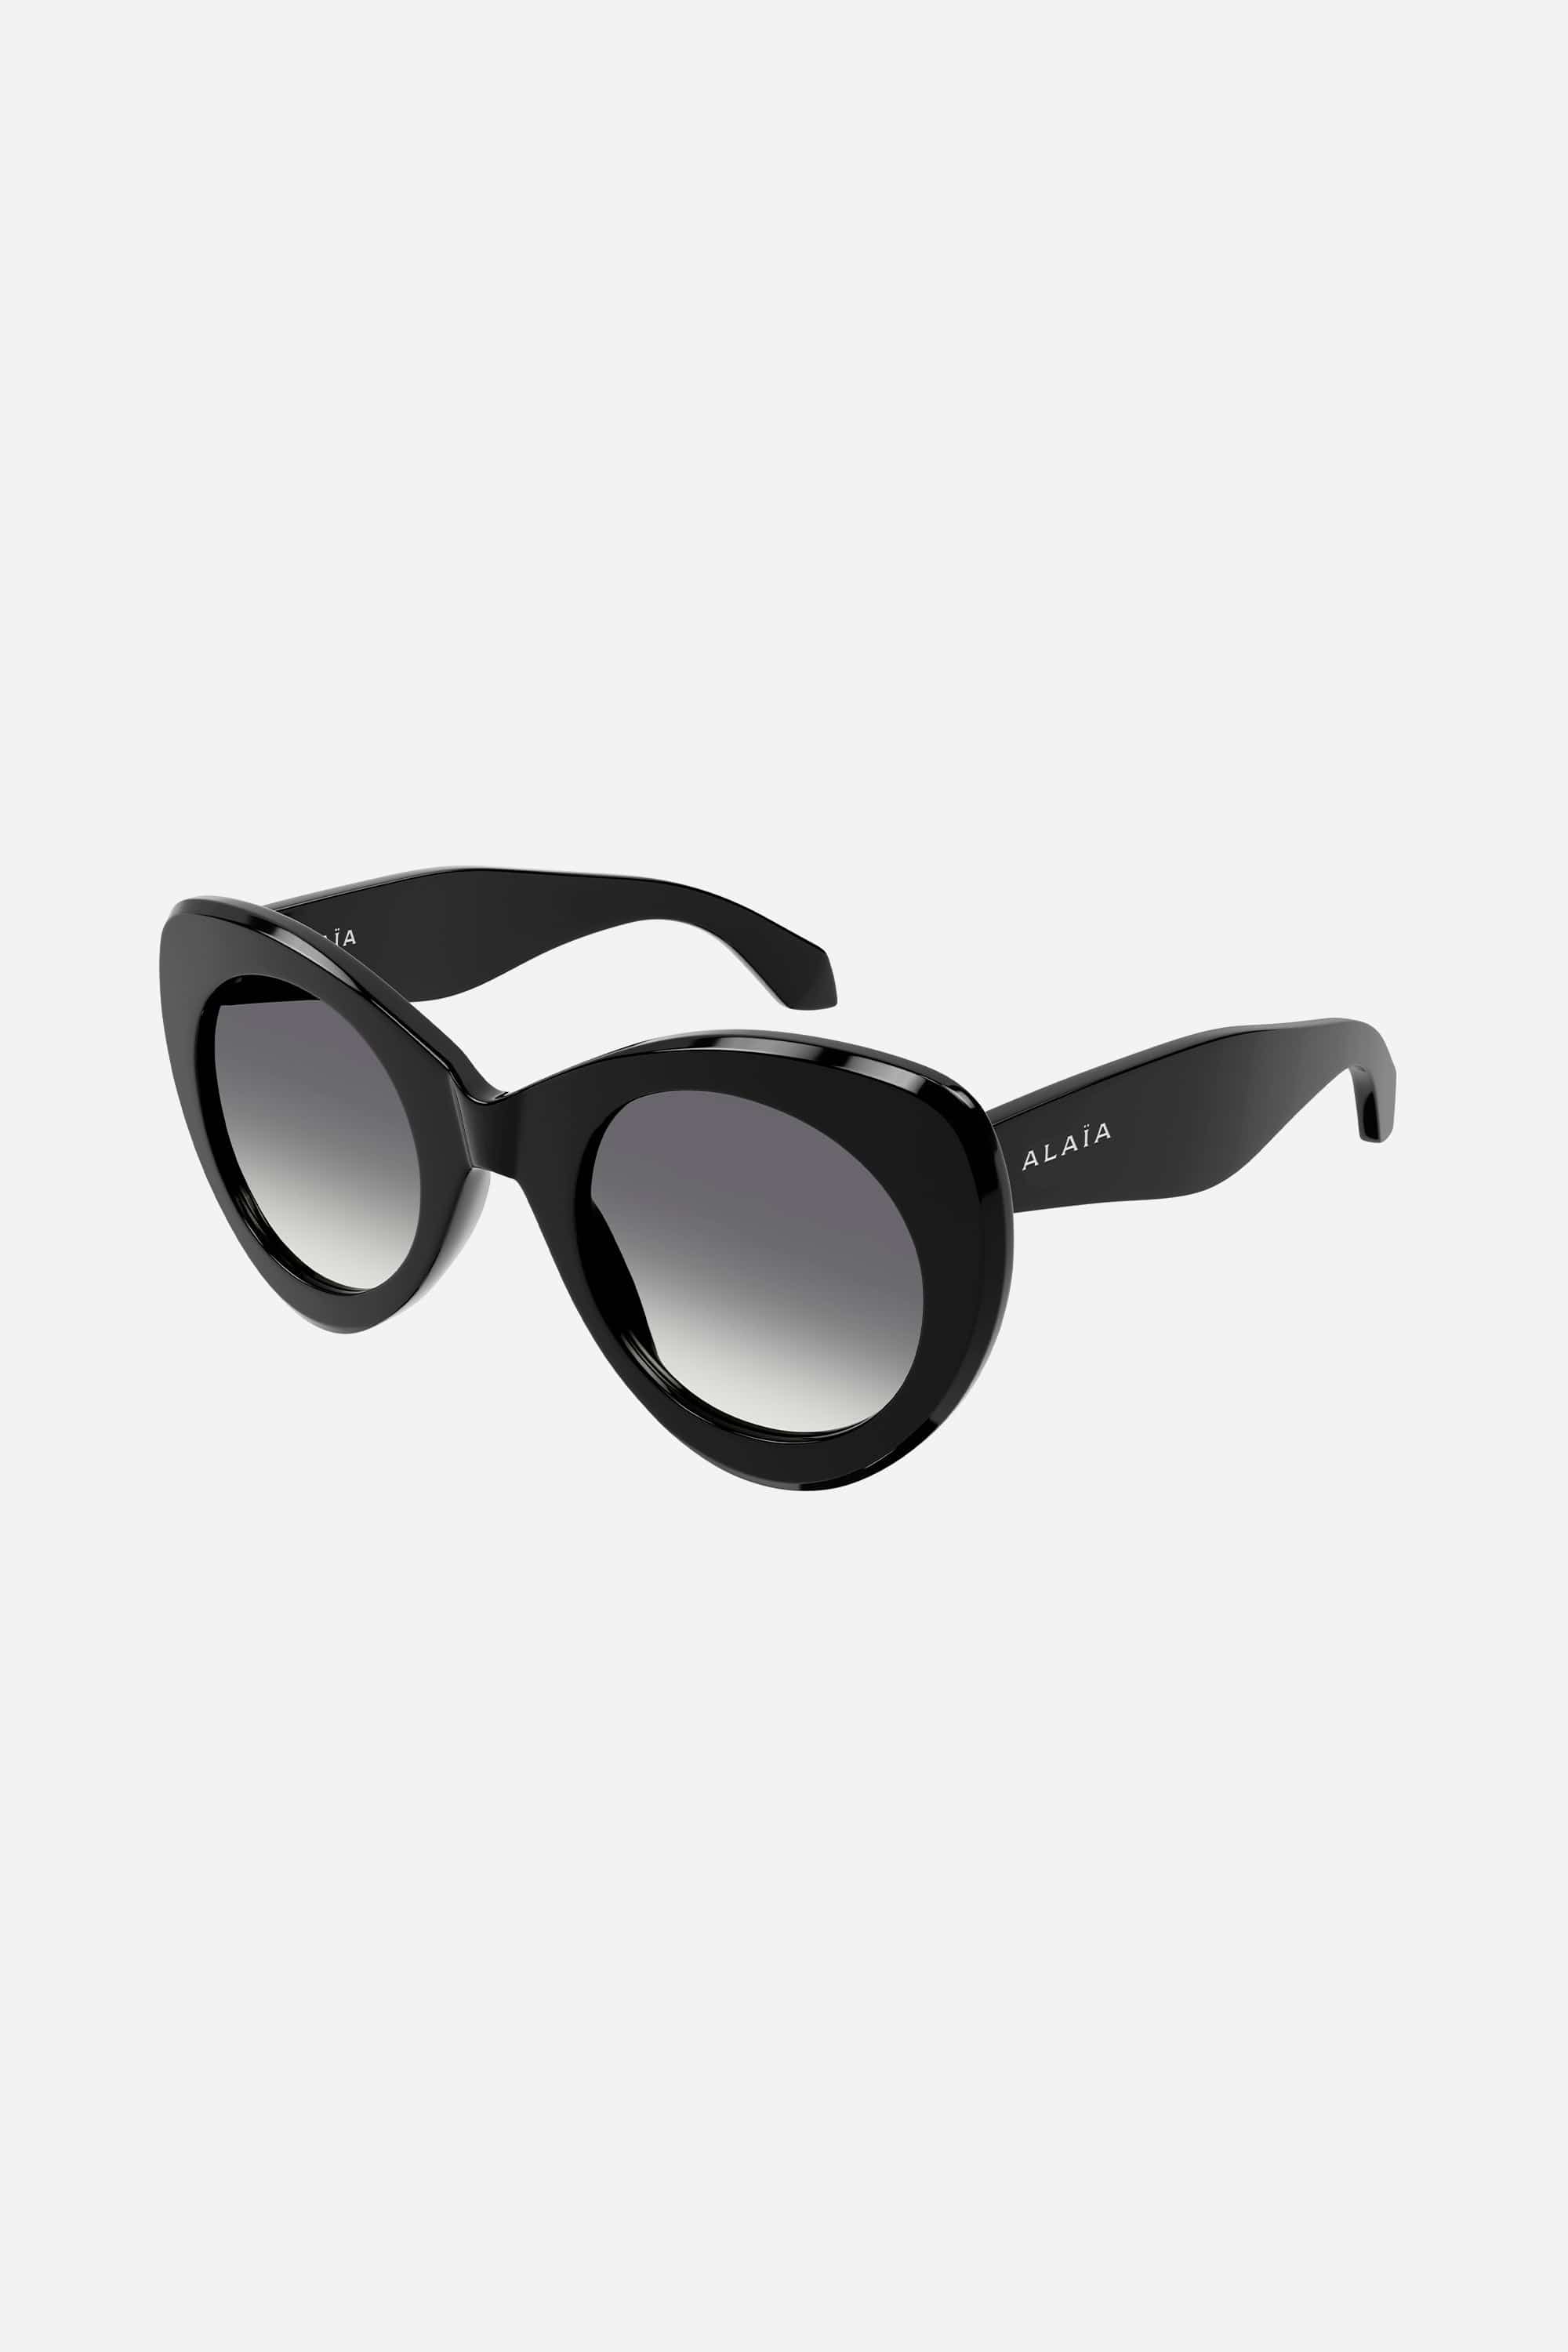 Alaia Black Butterfly sunglasses - Eyewear Club